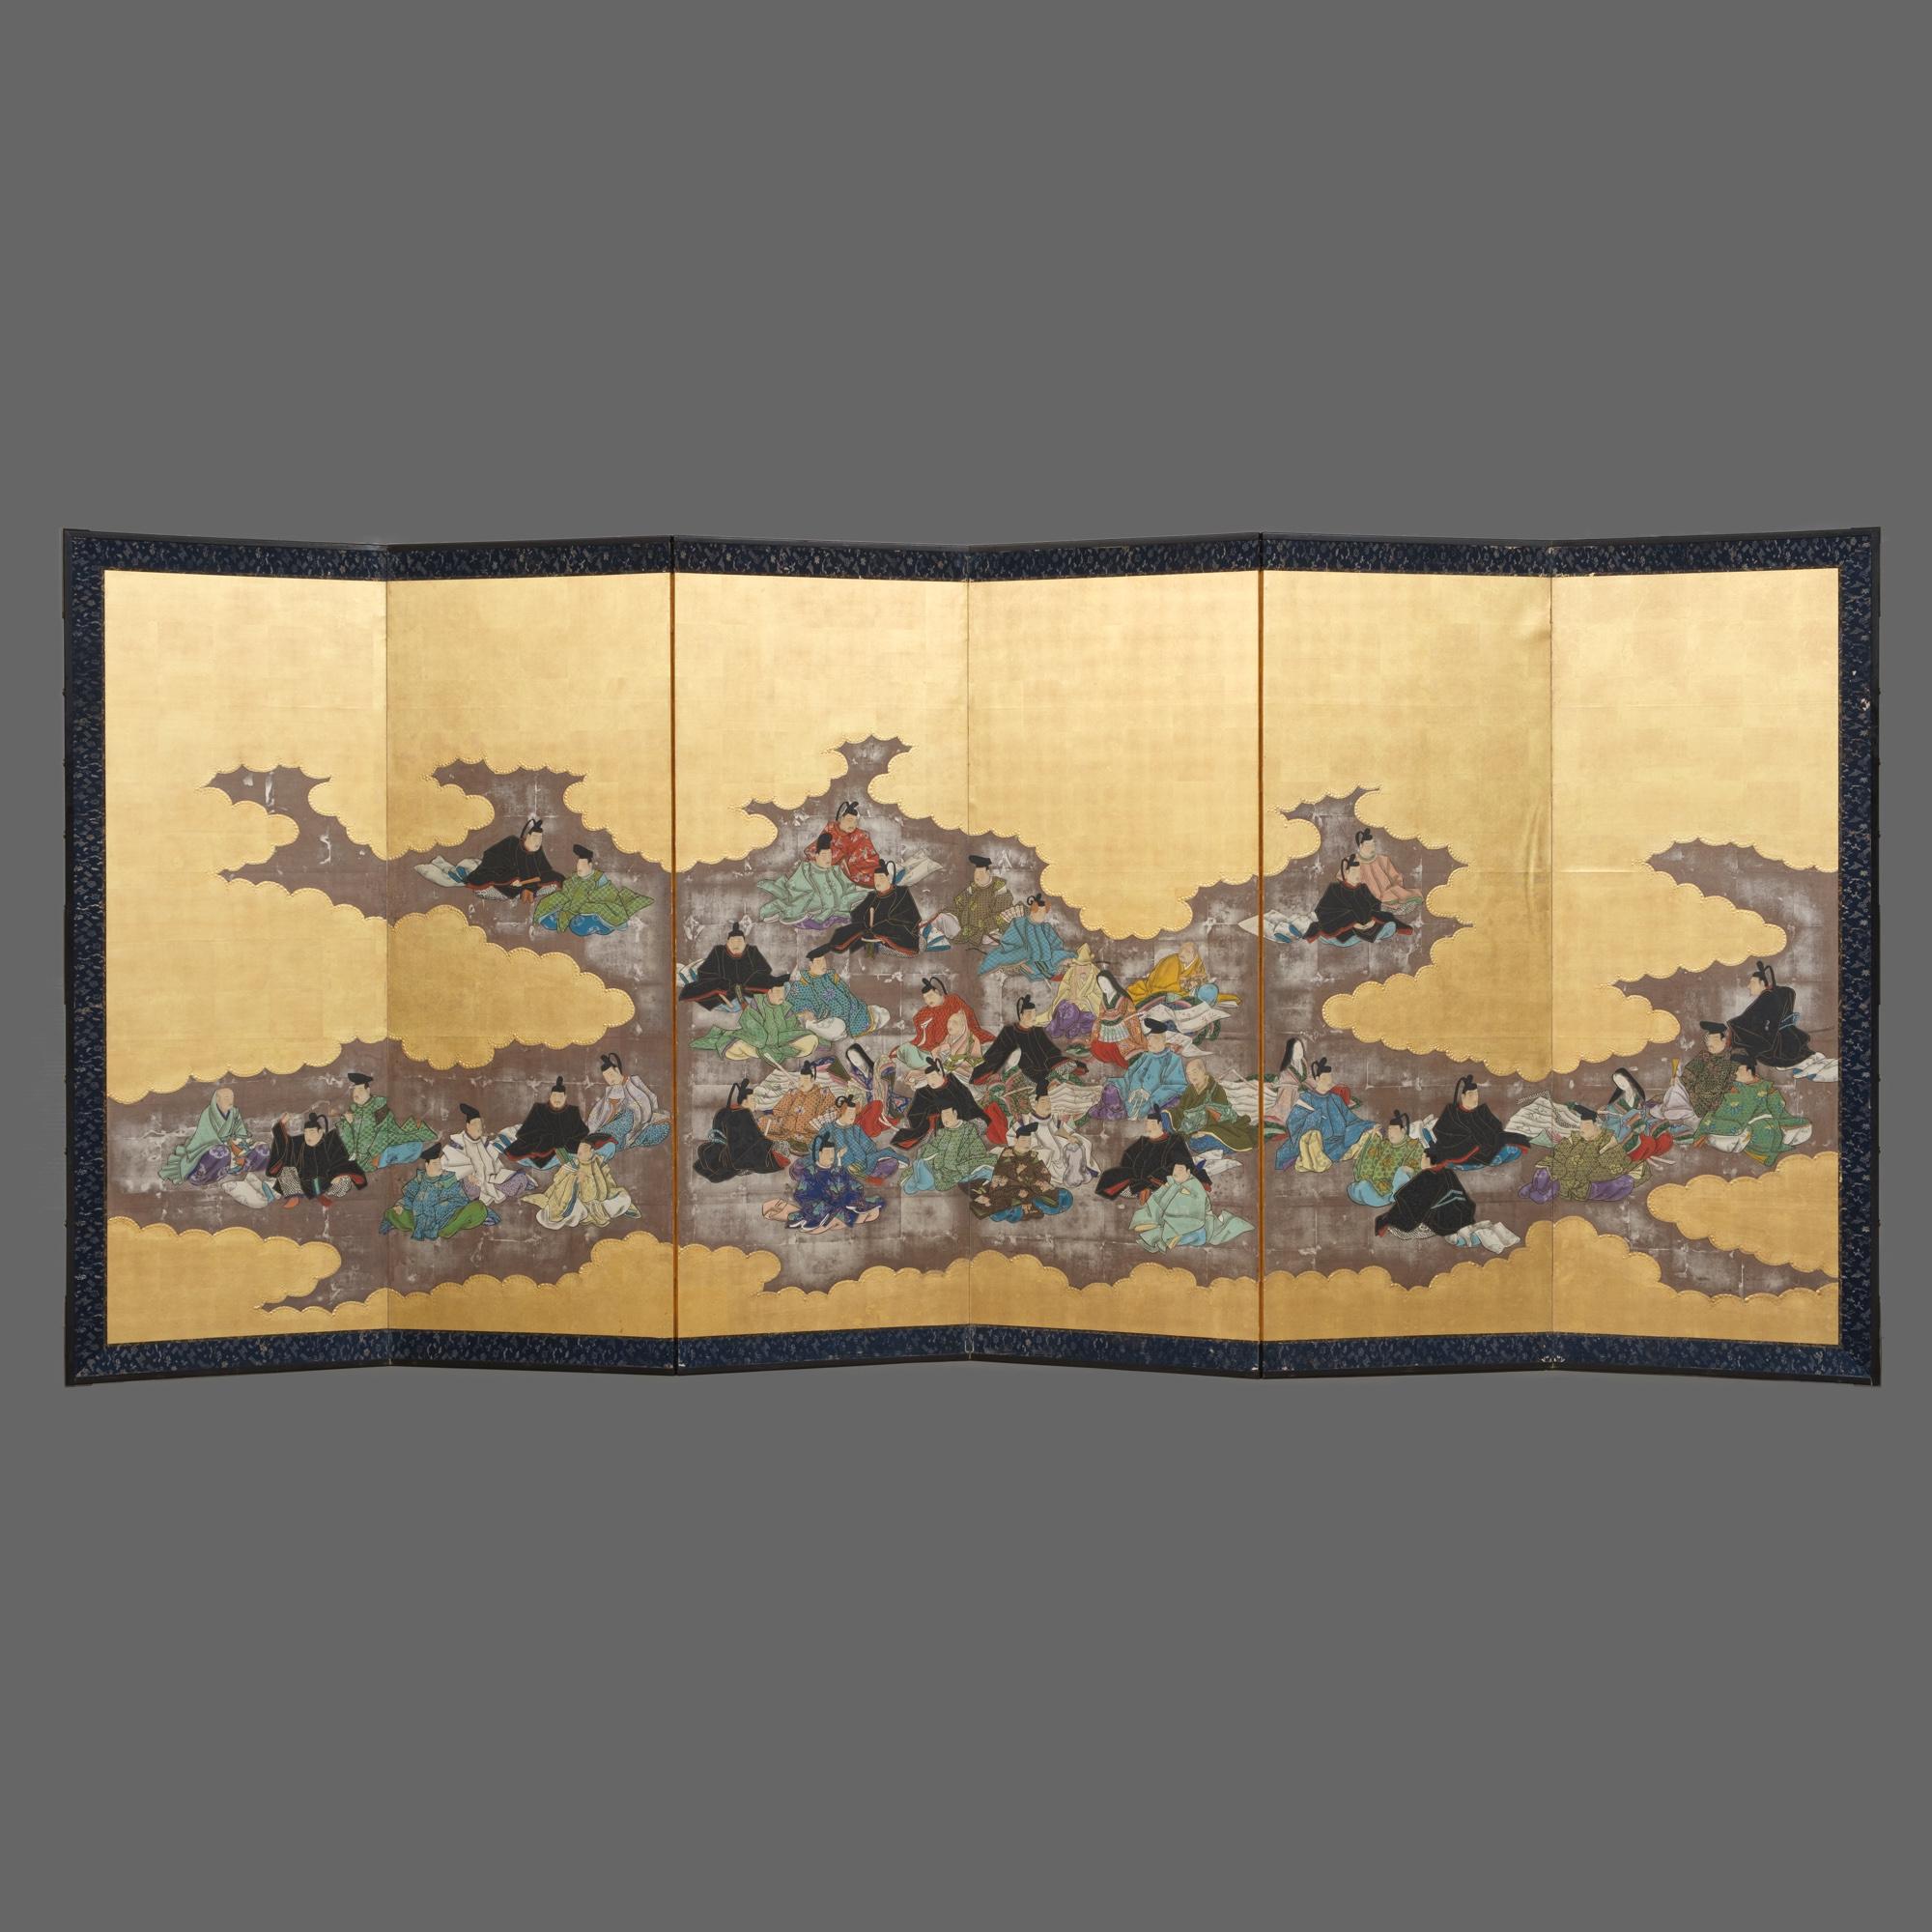 Pair of Japanese folding screens (byôbu) of poets from ‘Hyakunin isshu’ 百人一首 6